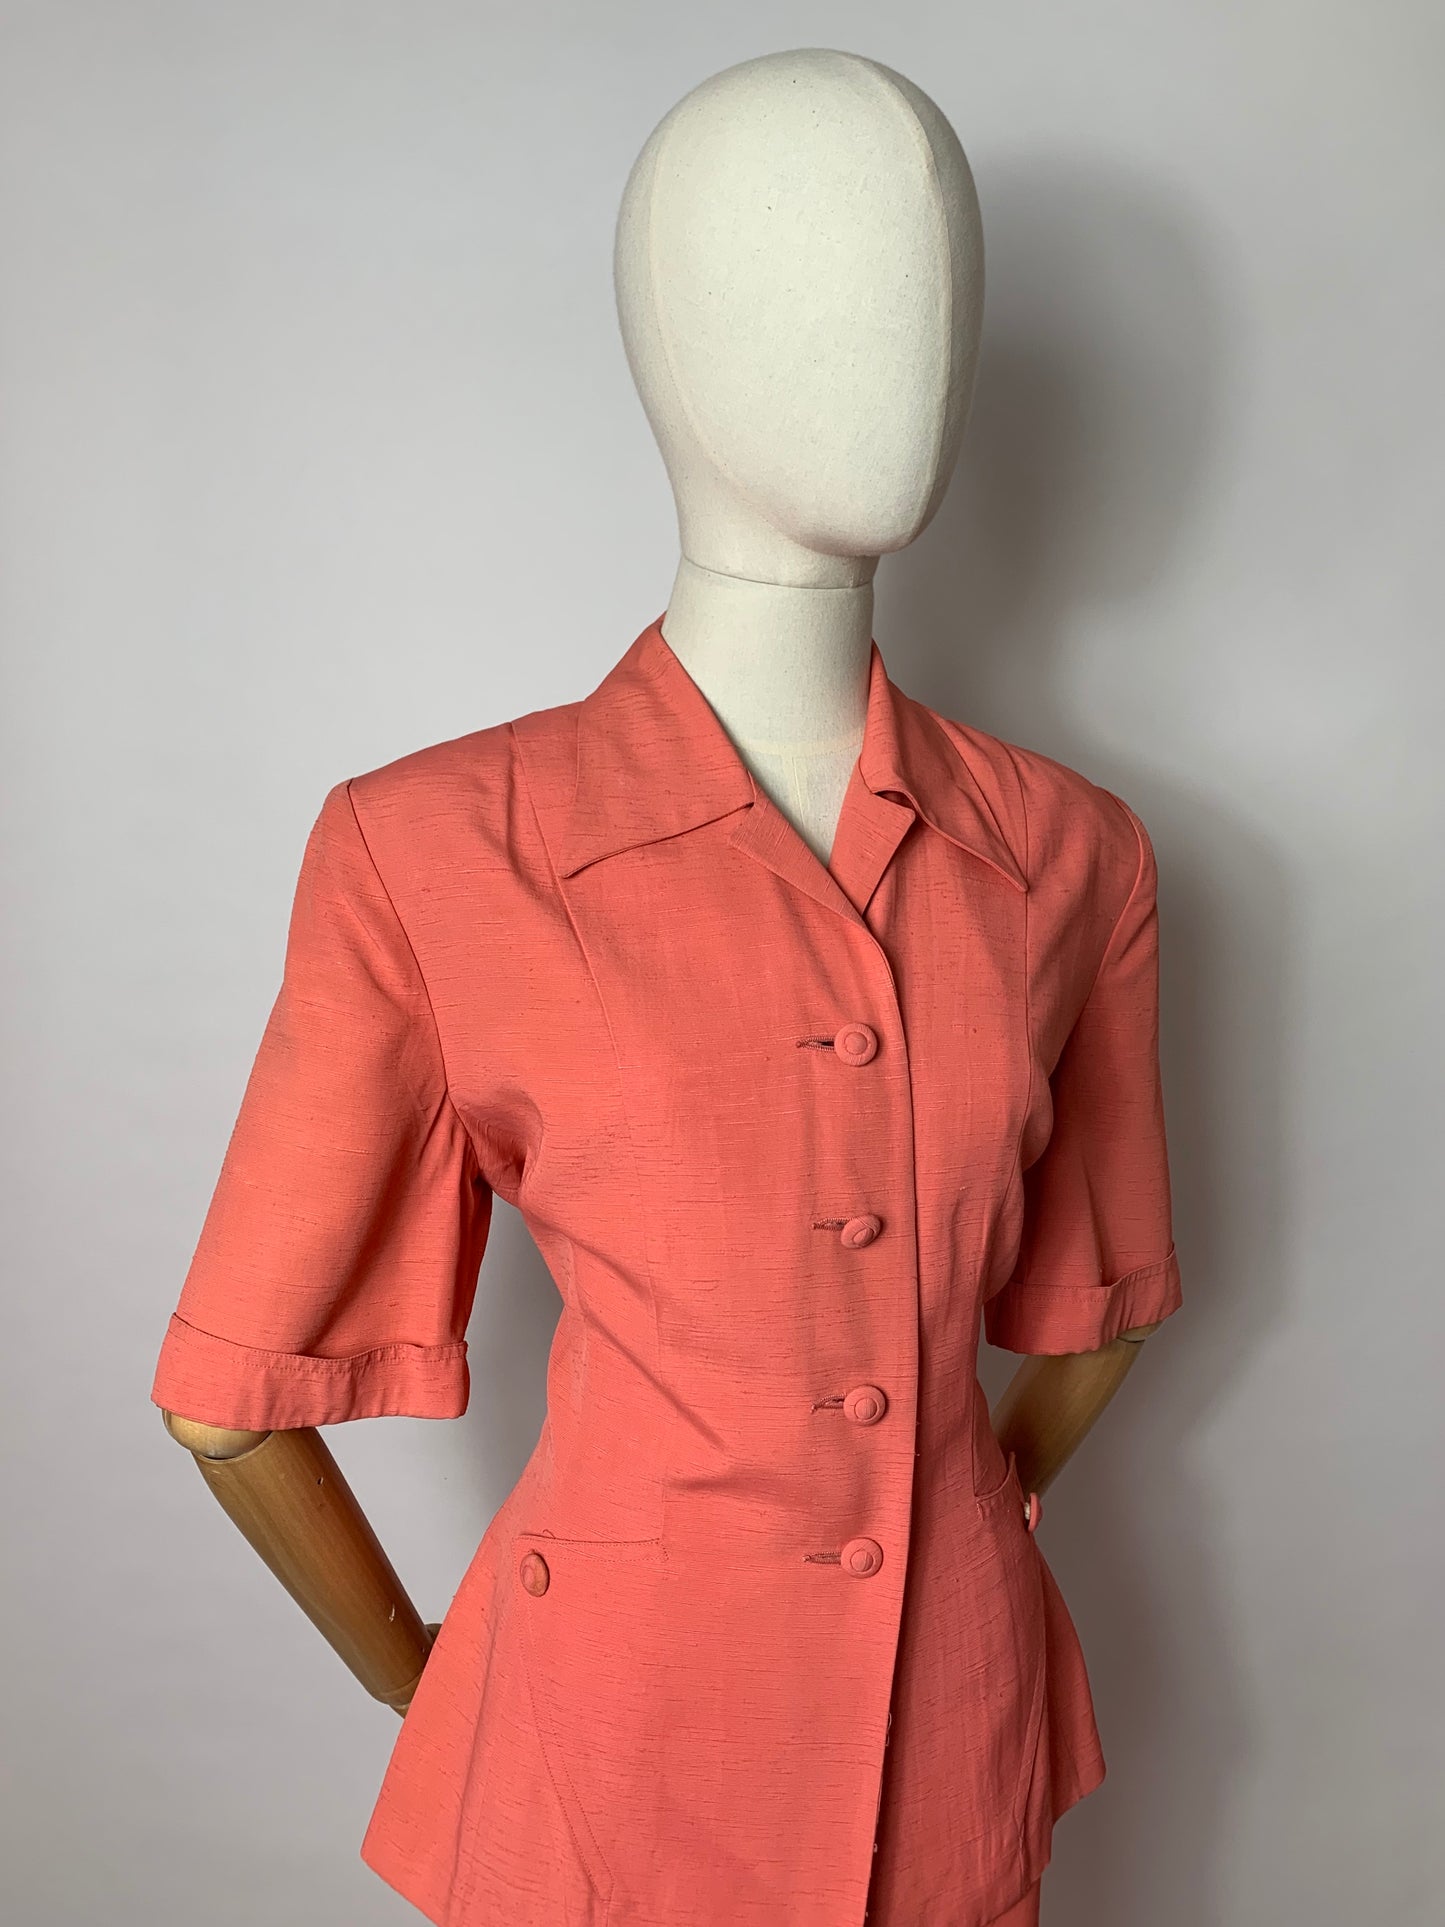 Original 1940’s 2pc Summer Suit - Fabulous Coral Colour and Lovely Detailing